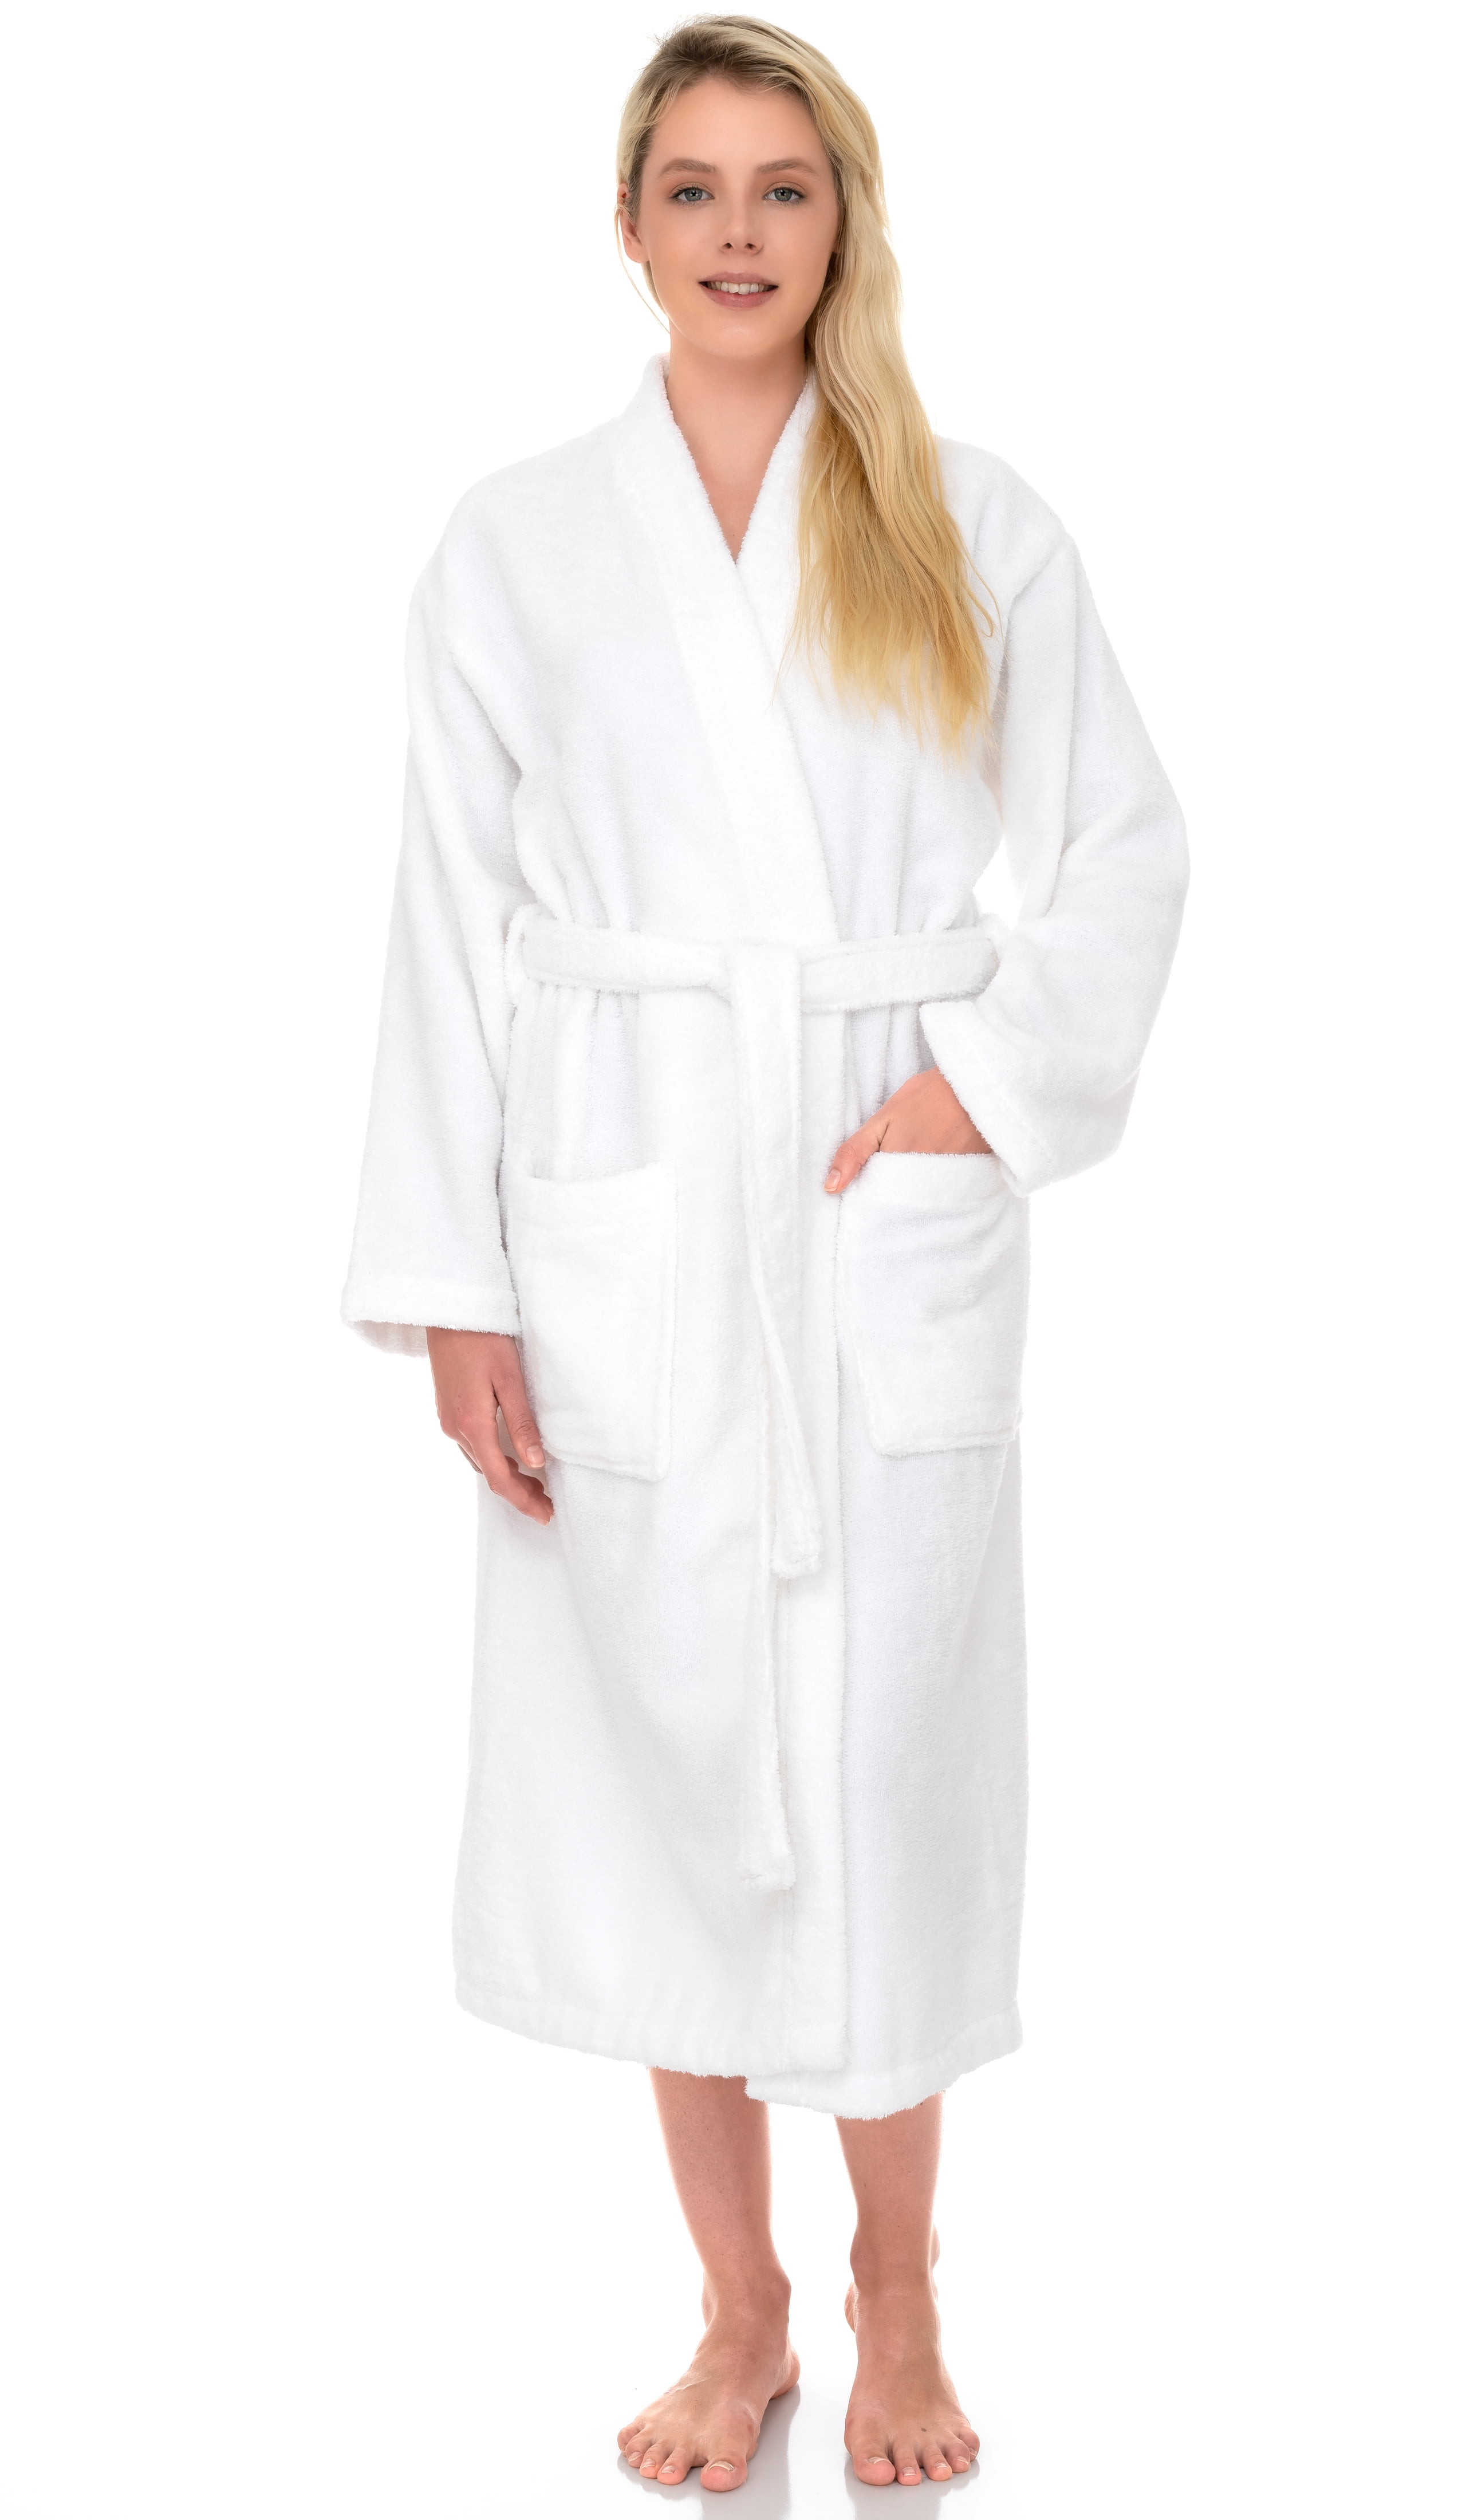 TowelSelections Women's Robe Cotton Terry Cloth Kimono Soft Bathrobe X ...